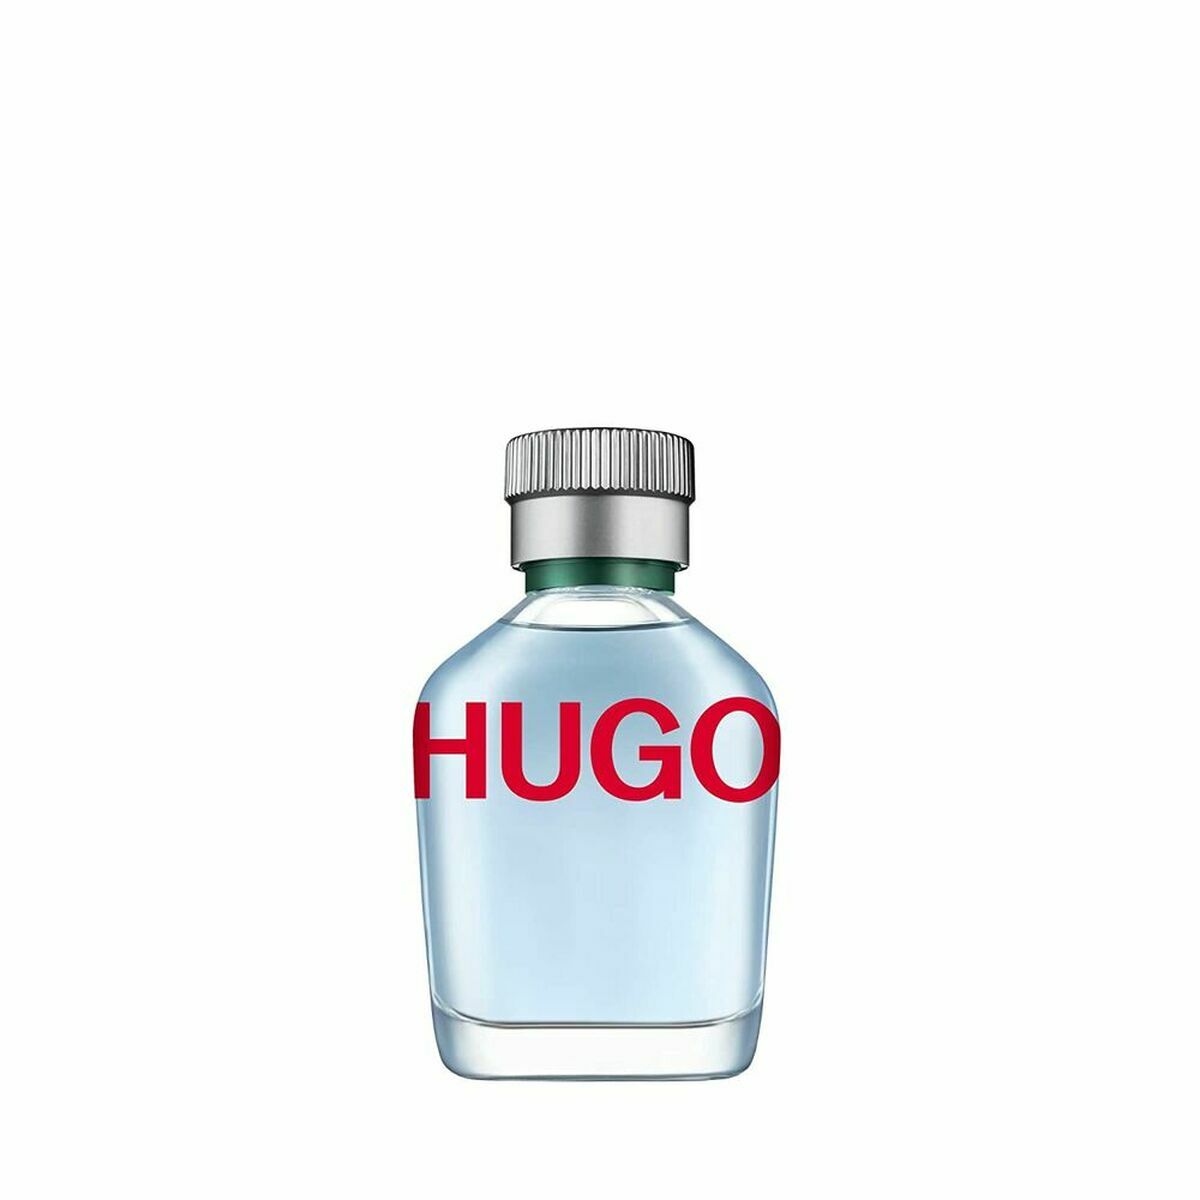 Profumo Uomo Hugo Boss (40 ml)